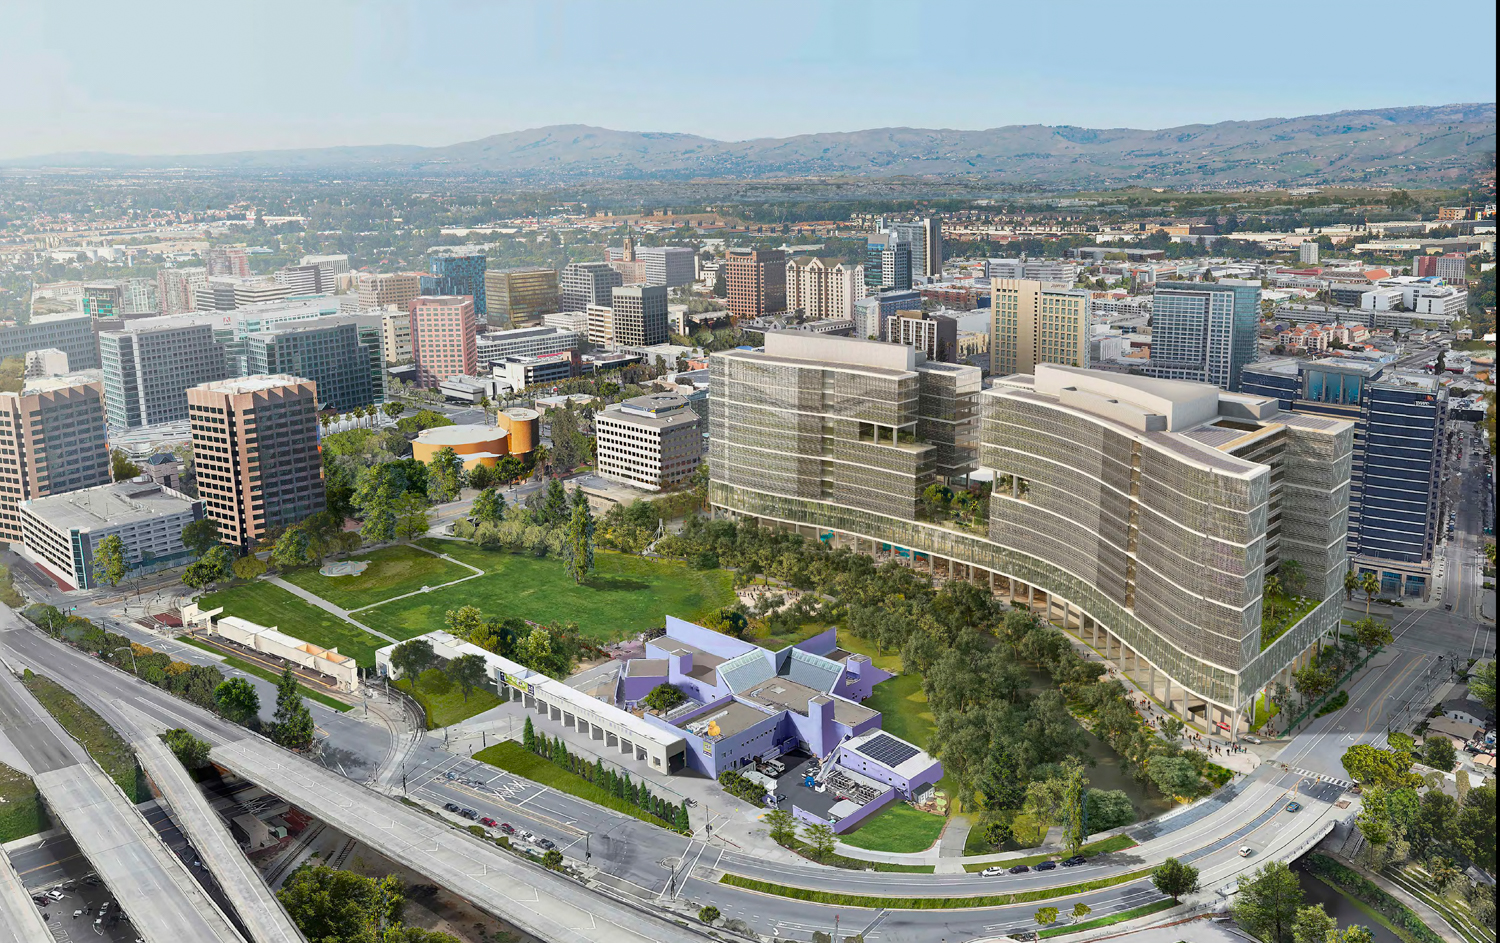 South Almaden Offices aerial view facing downtown San Jose, design by Kohn Pedersen Fox